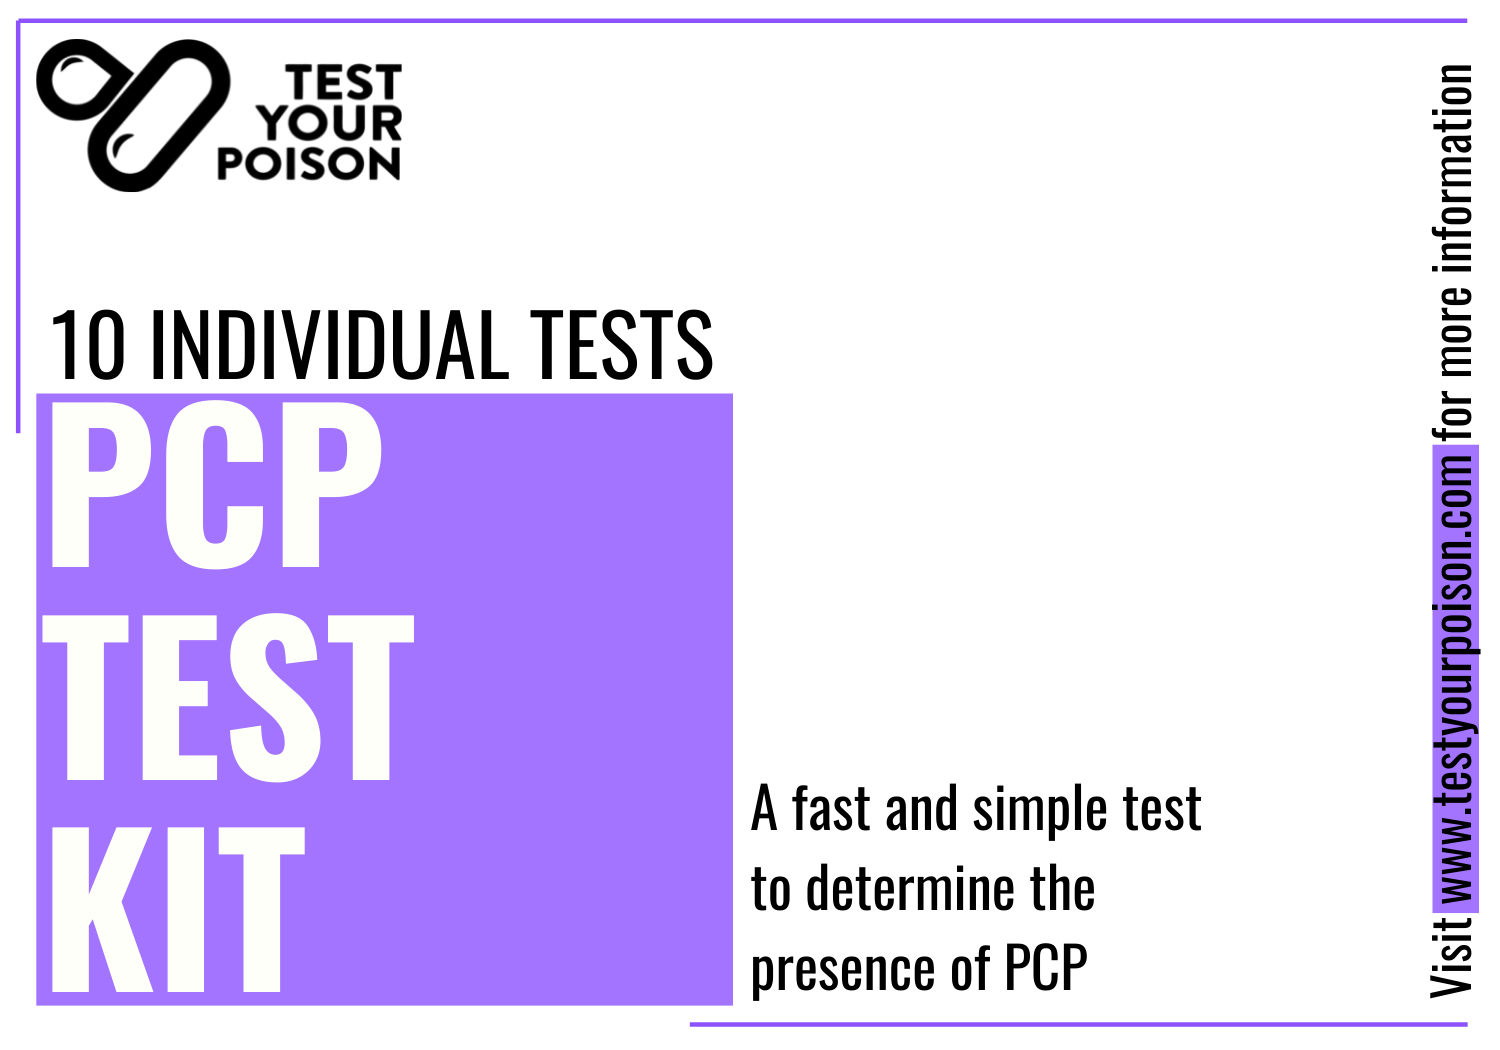 PCP Test Kit Packaging